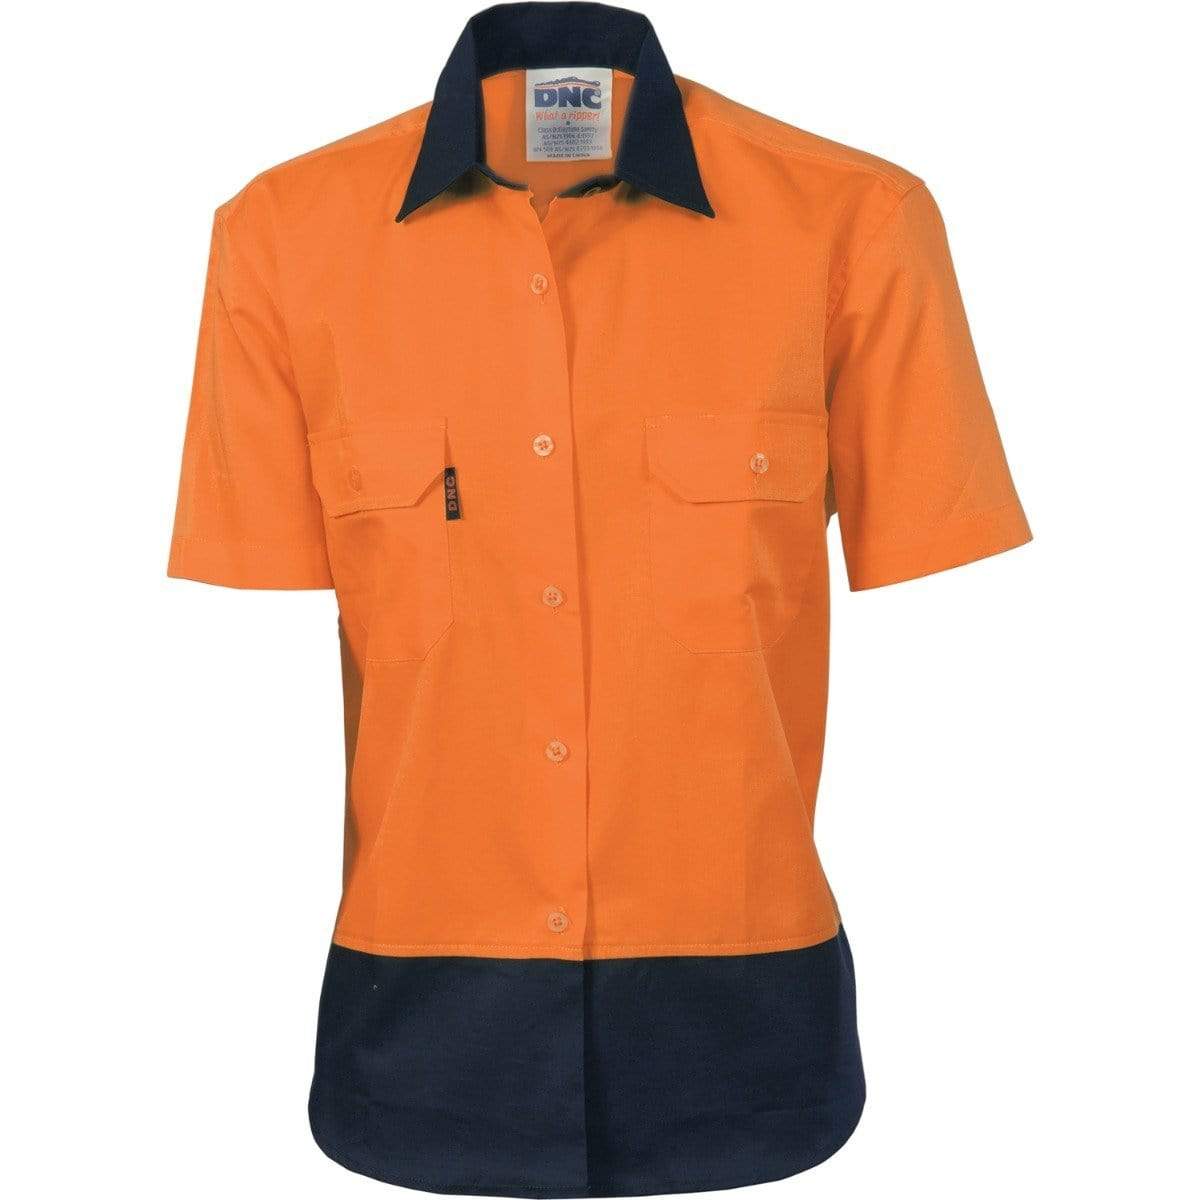 Dnc Workwear Women’s Hi-vis Two-tone Cotton Drill Short Sleeve Shirt - 3931 Work Wear DNC Workwear Orange/Navy 8 